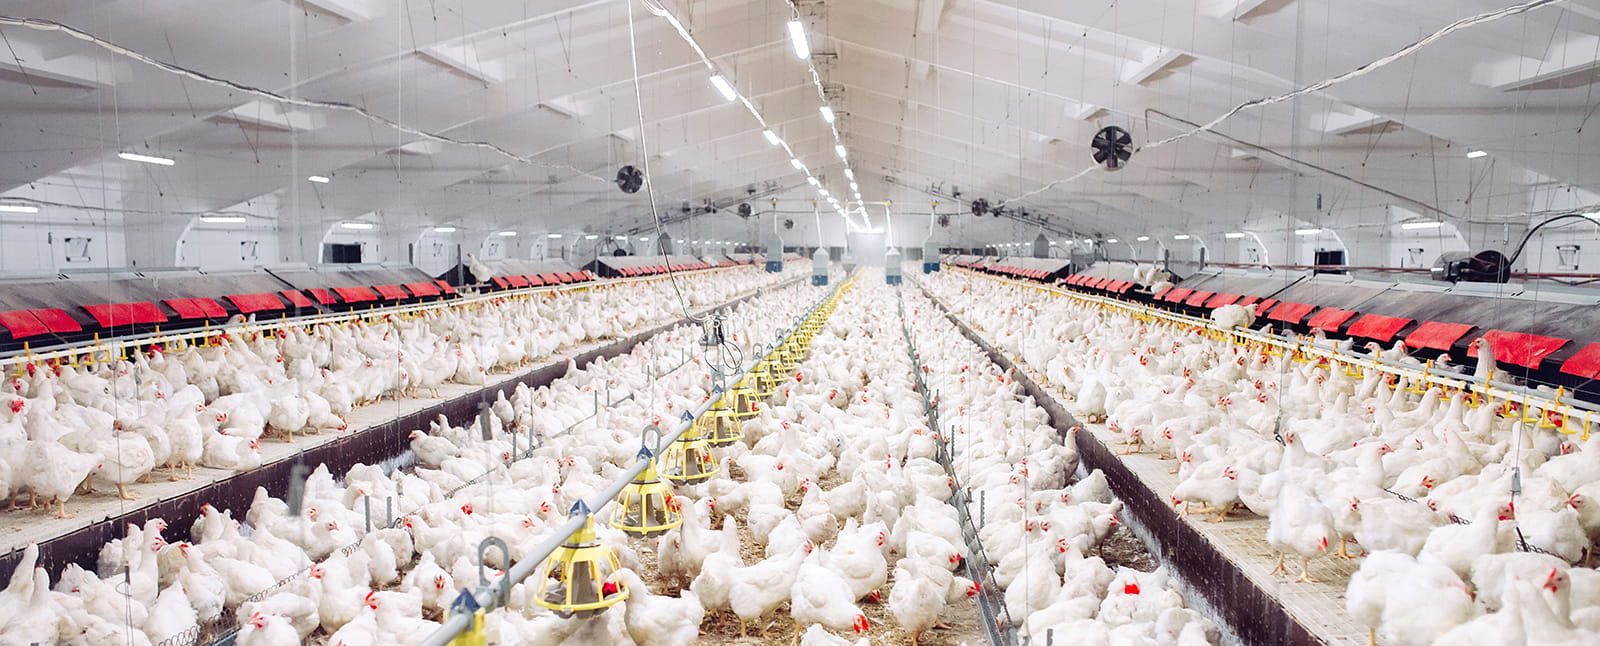 indoors chicken farm